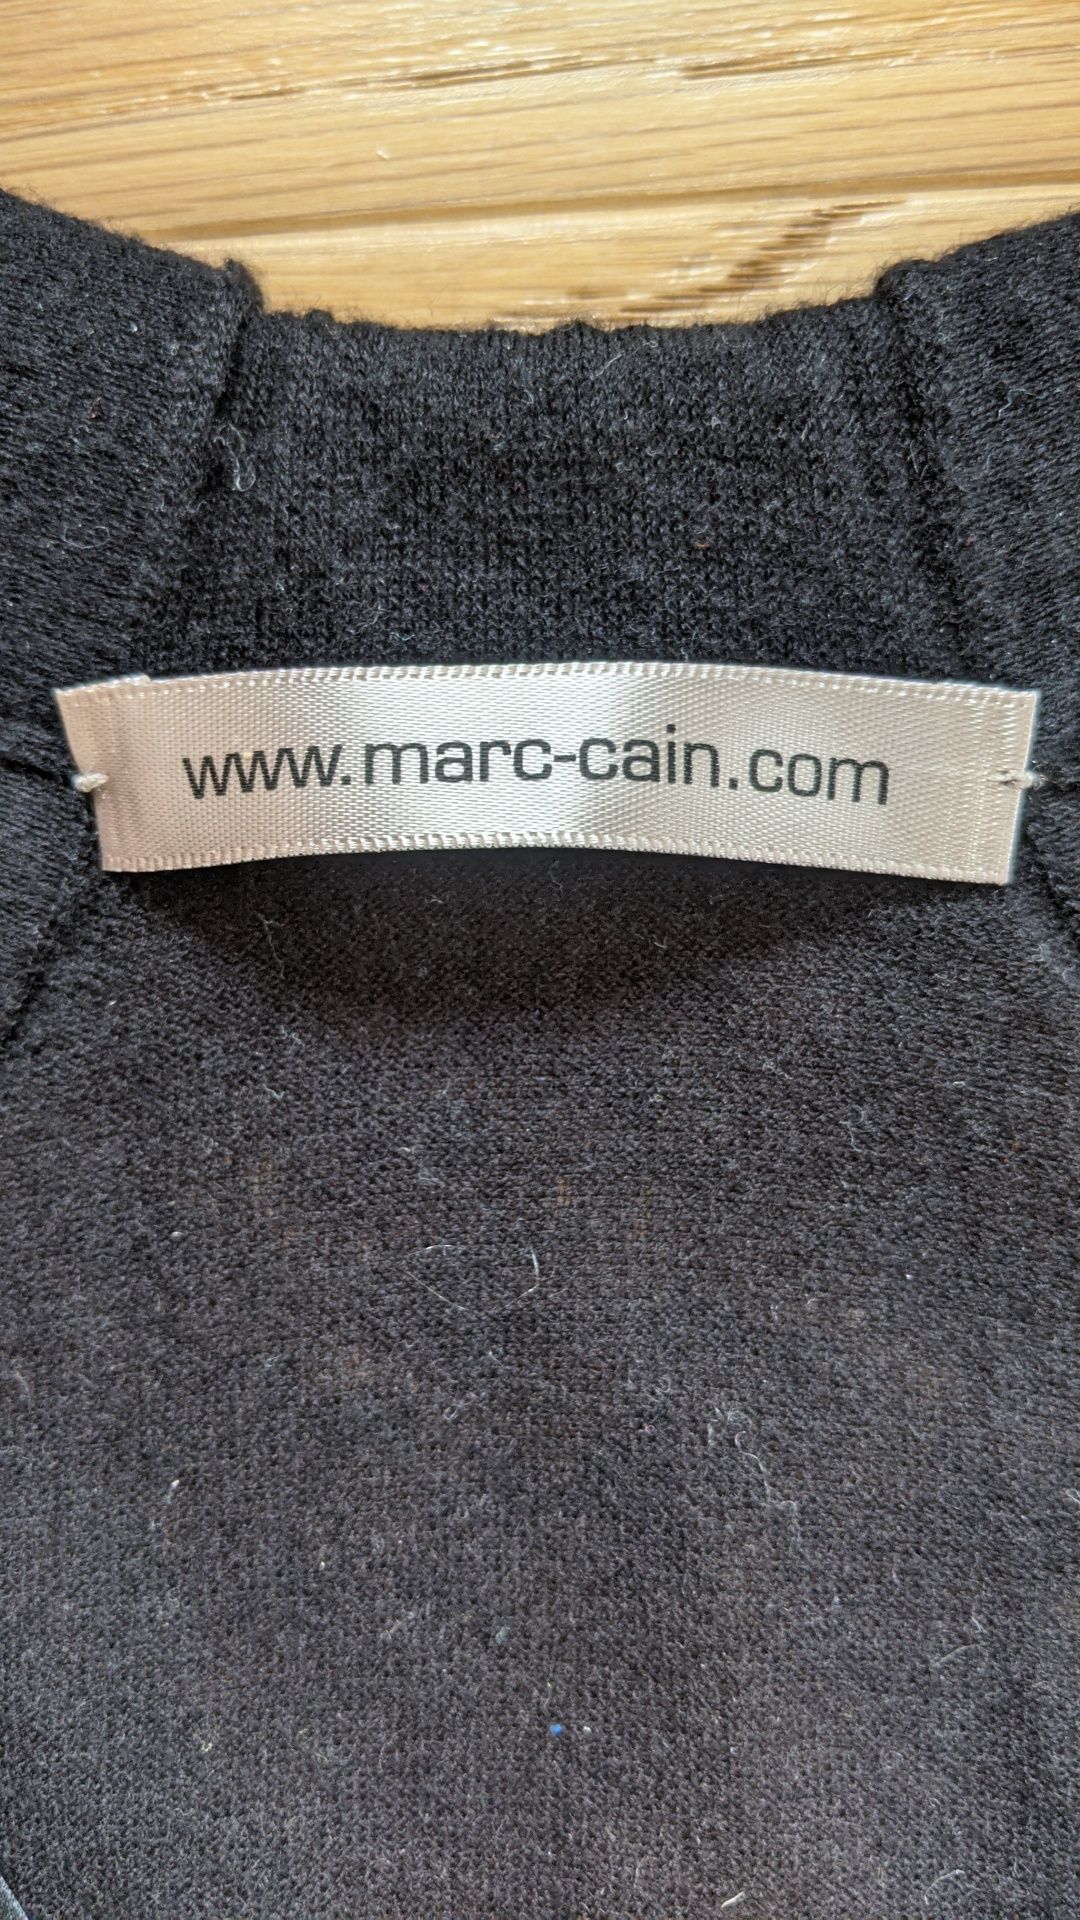 Bluzka marki Marc Cain, rozmiar 3 (38)